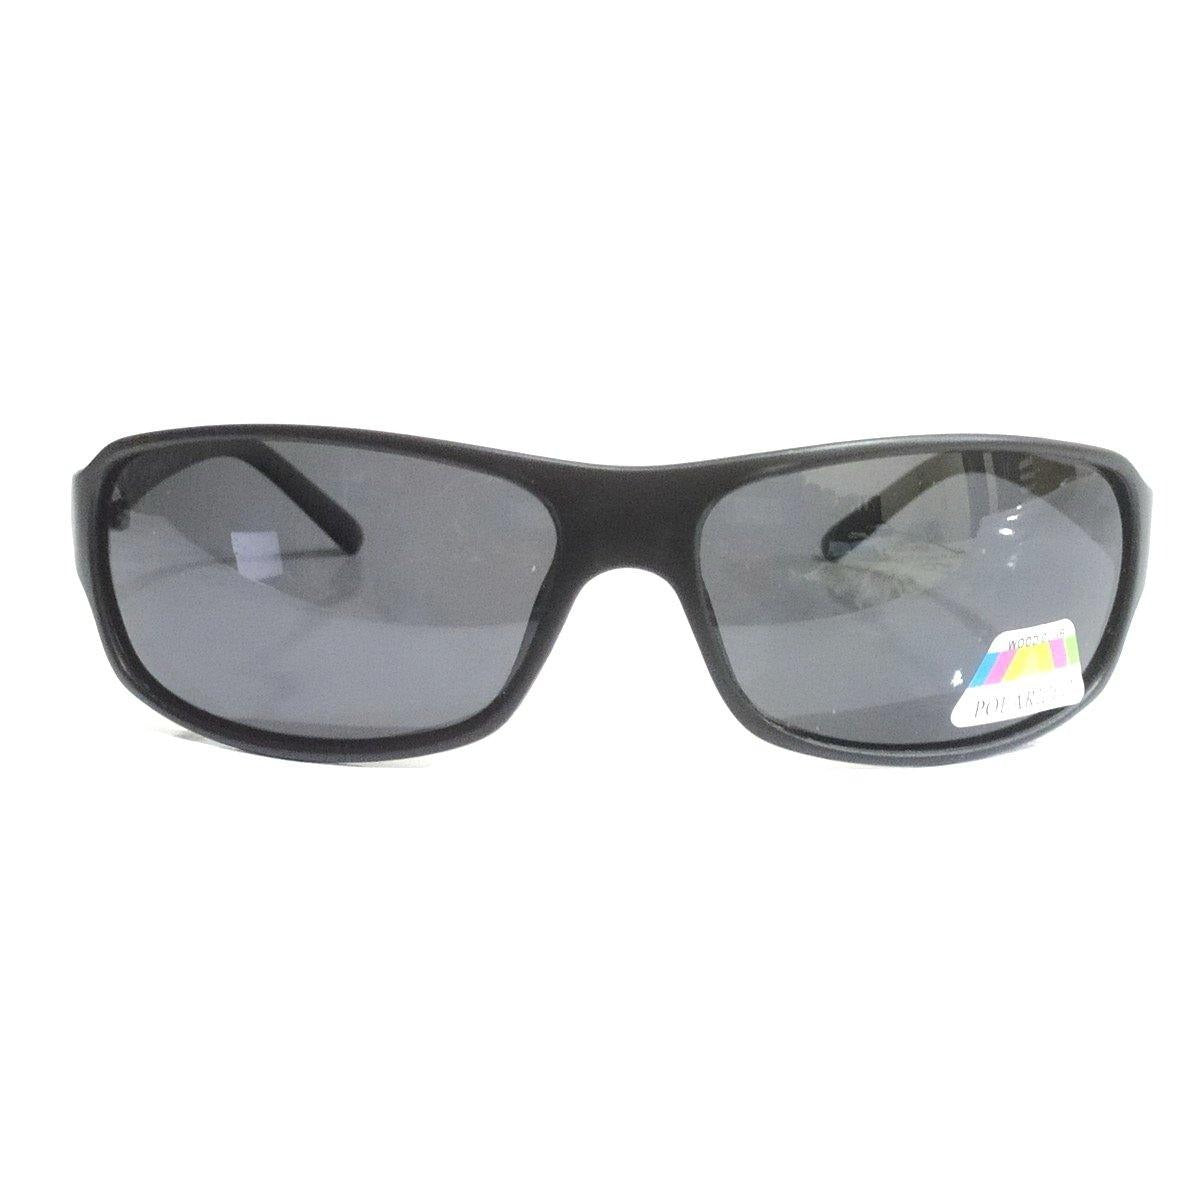 Wraparound Sports Polarized Sunglasses for Men and Women 10068MBK - Glasses India Online